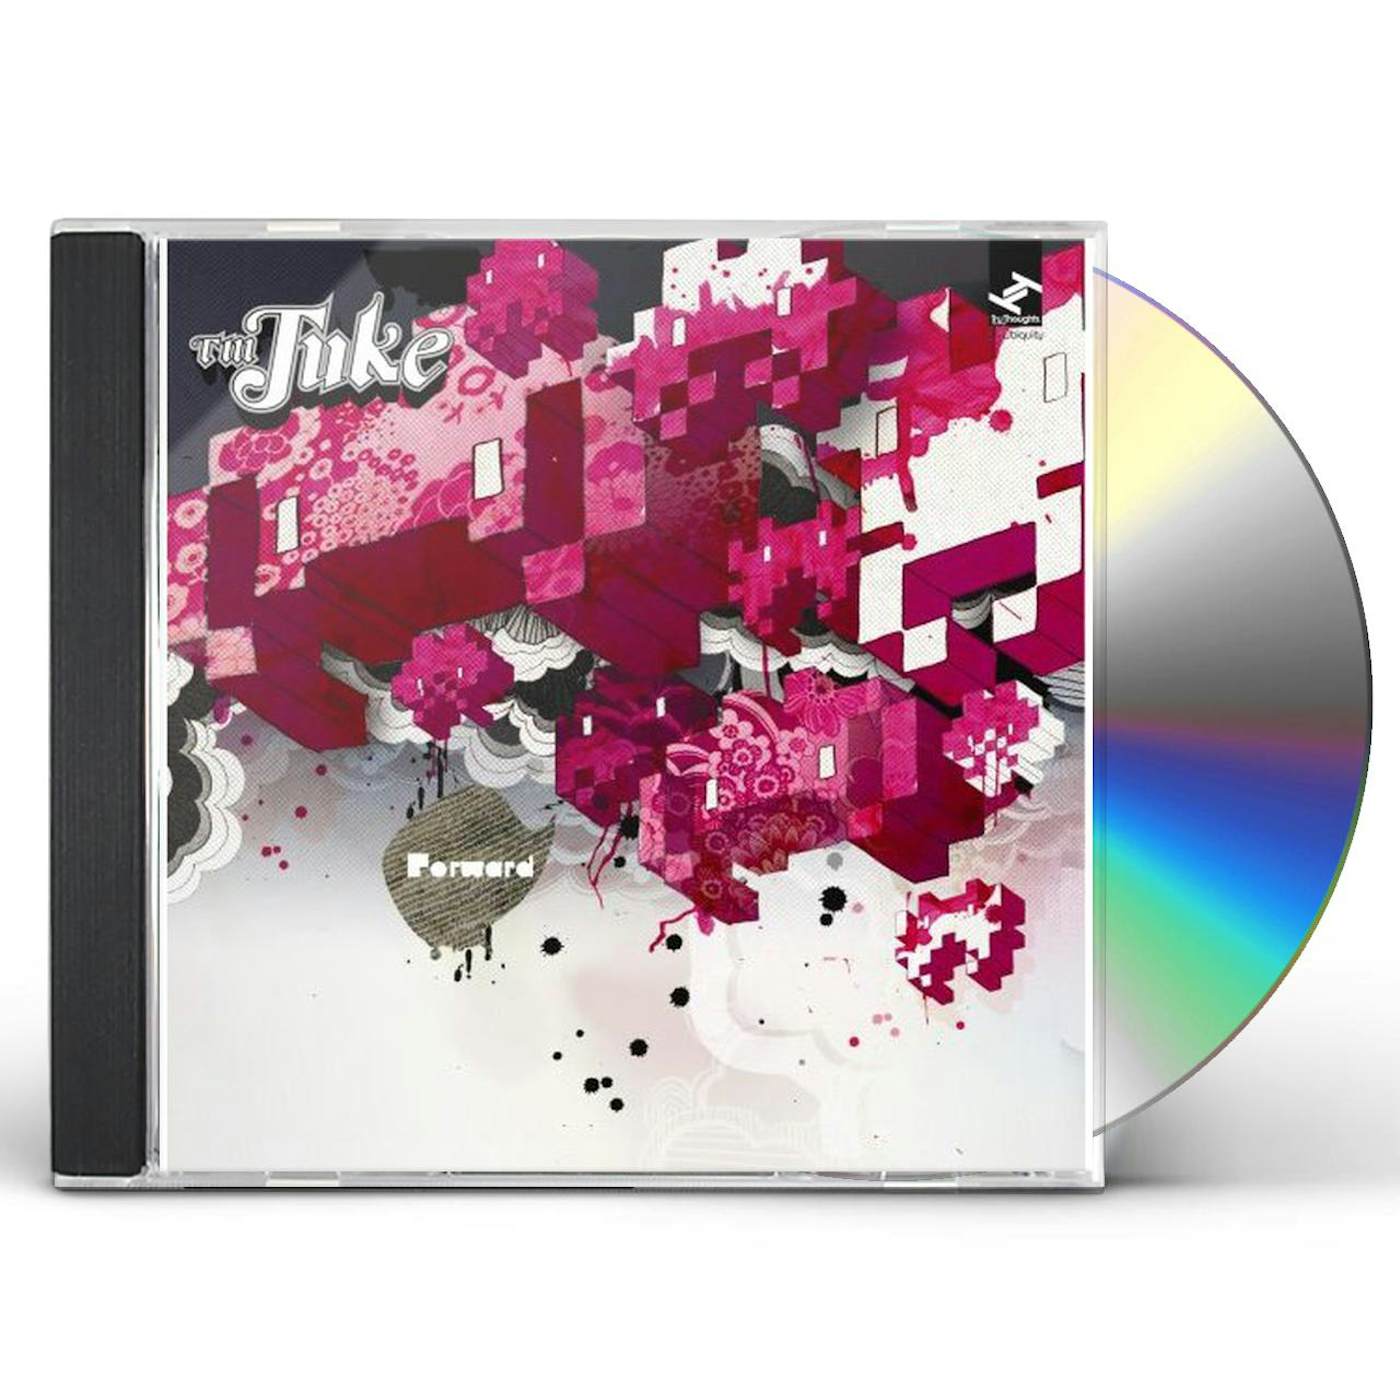 TM Juke FORWARD CD